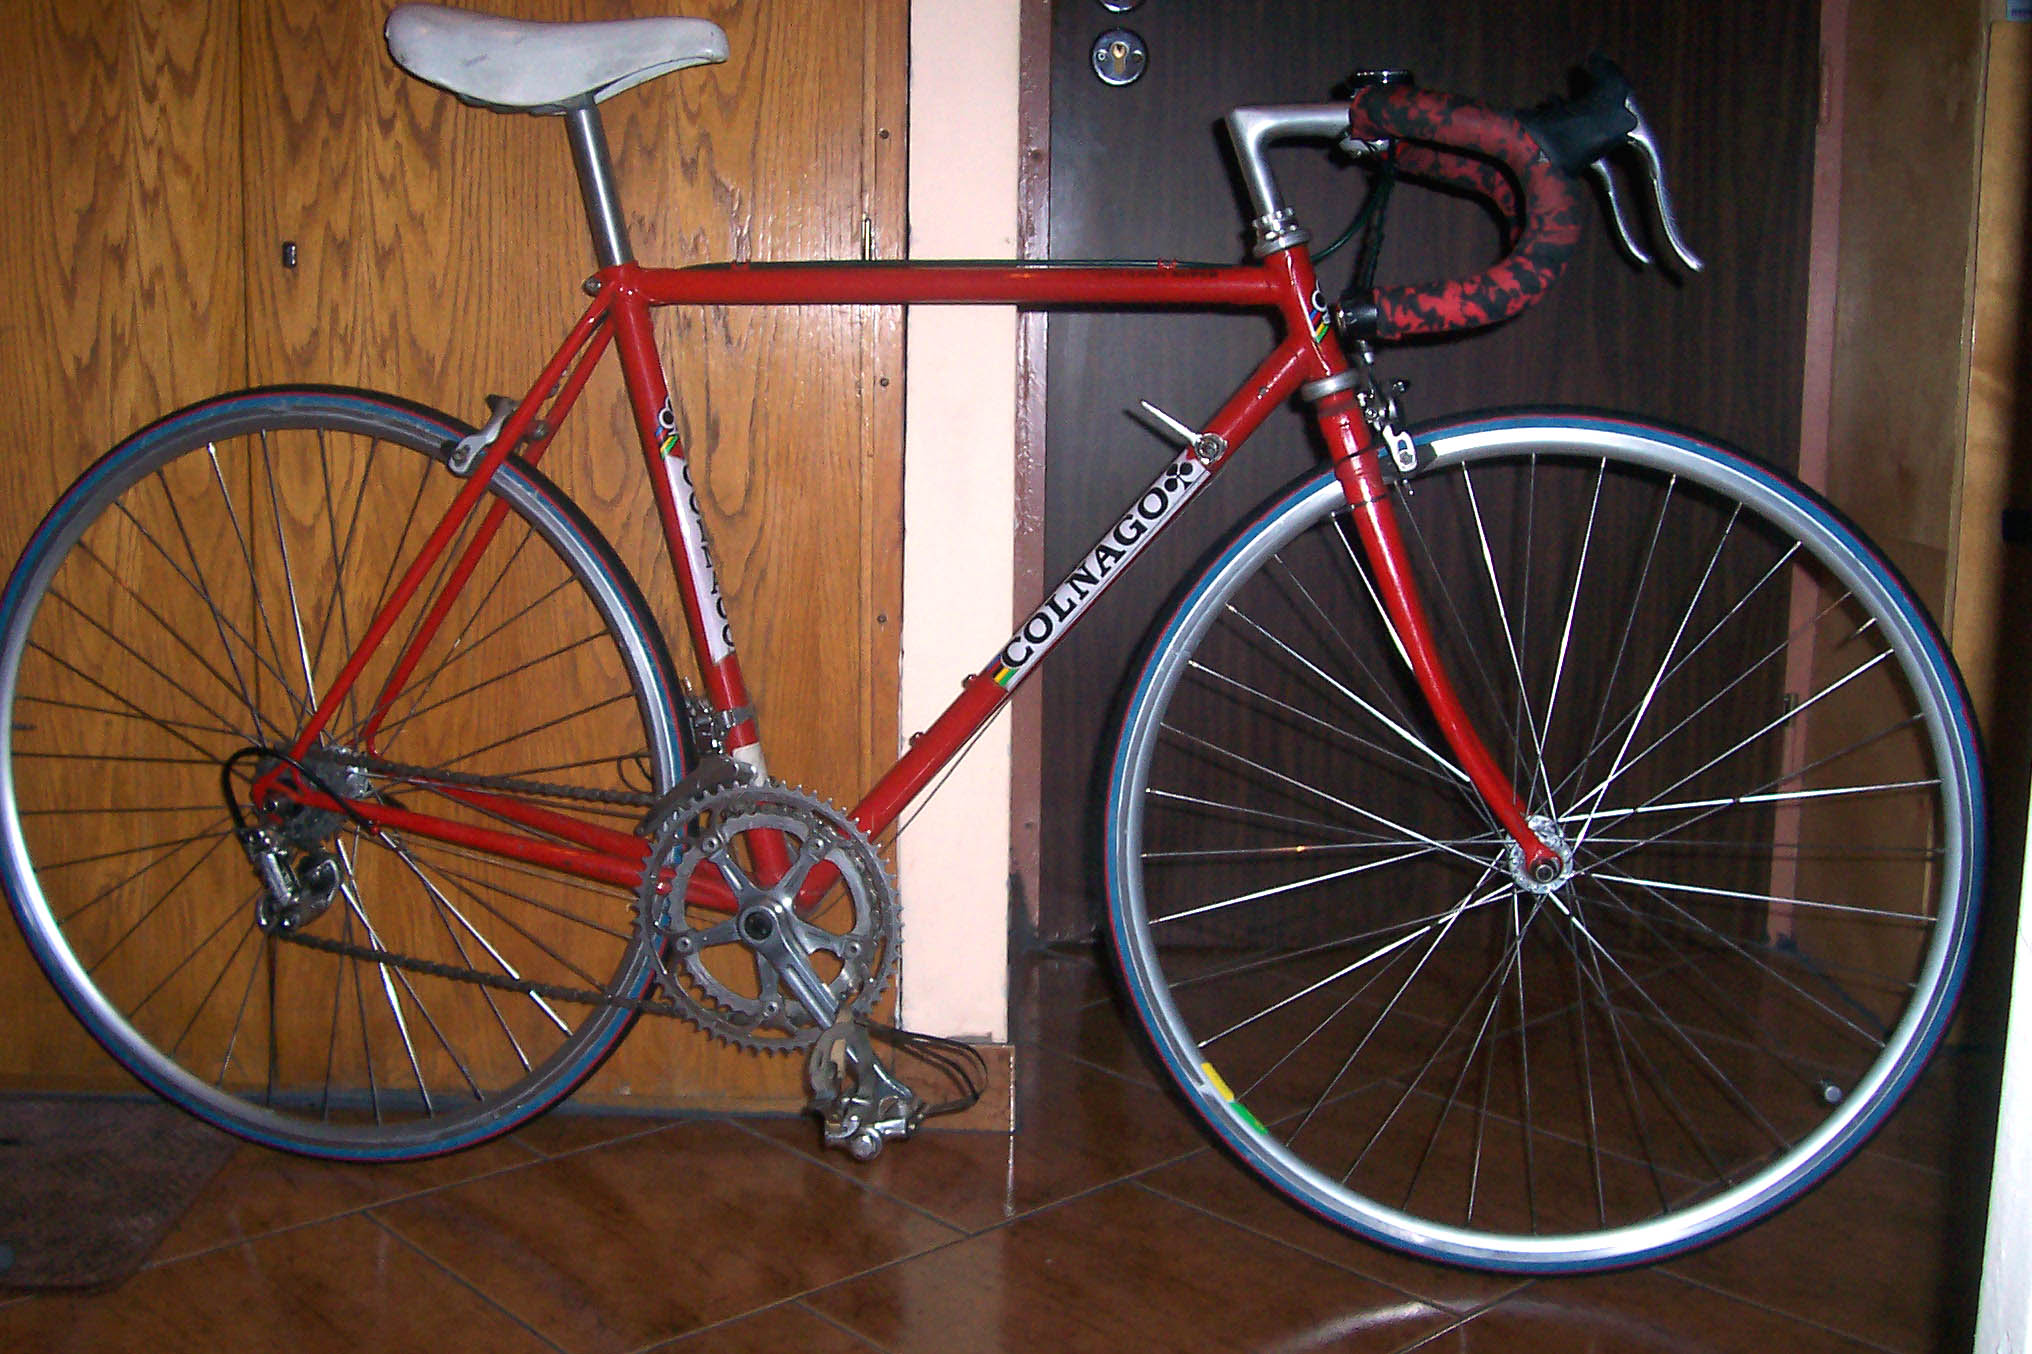 Old Colnago bike